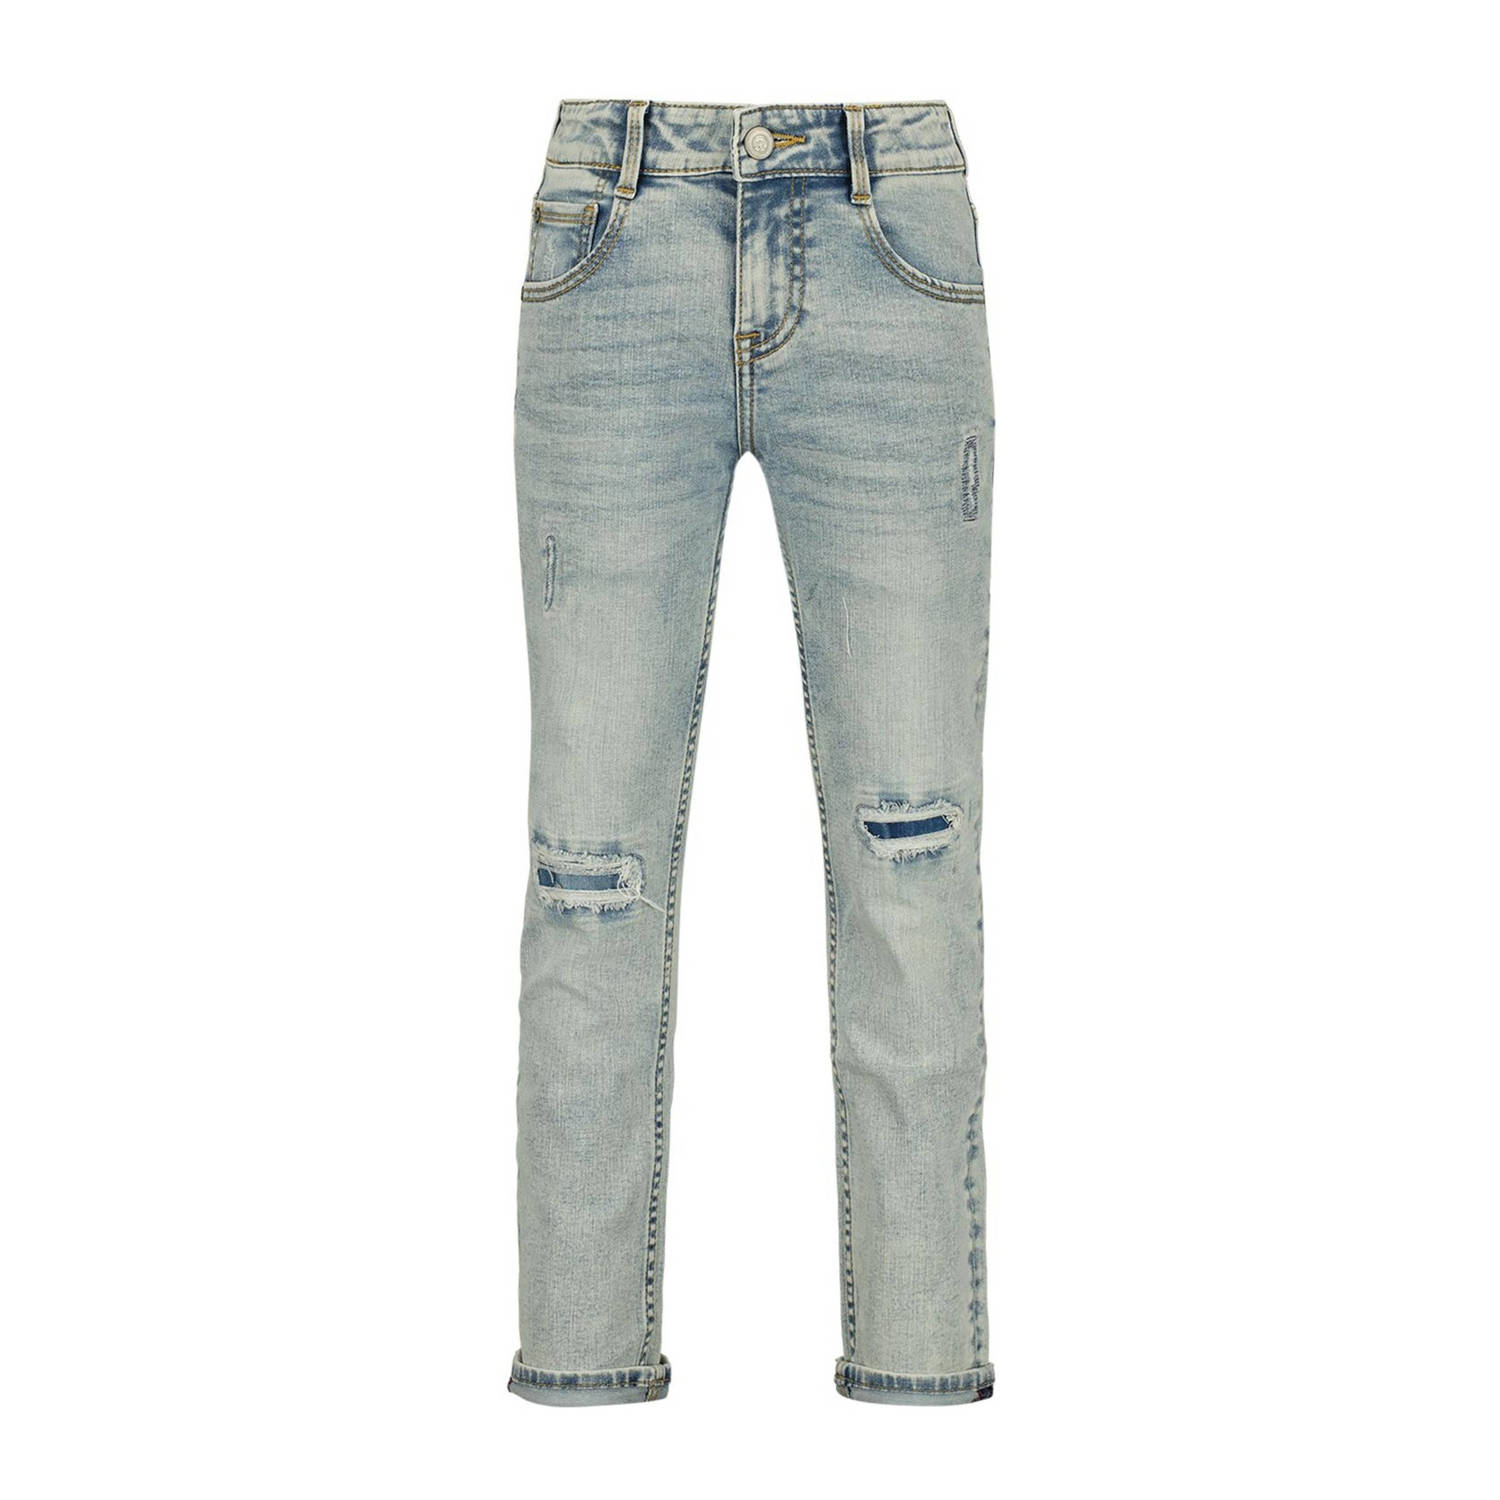 Raizzed straight fit jeans Berlin Crafted met slijtage light blue stone